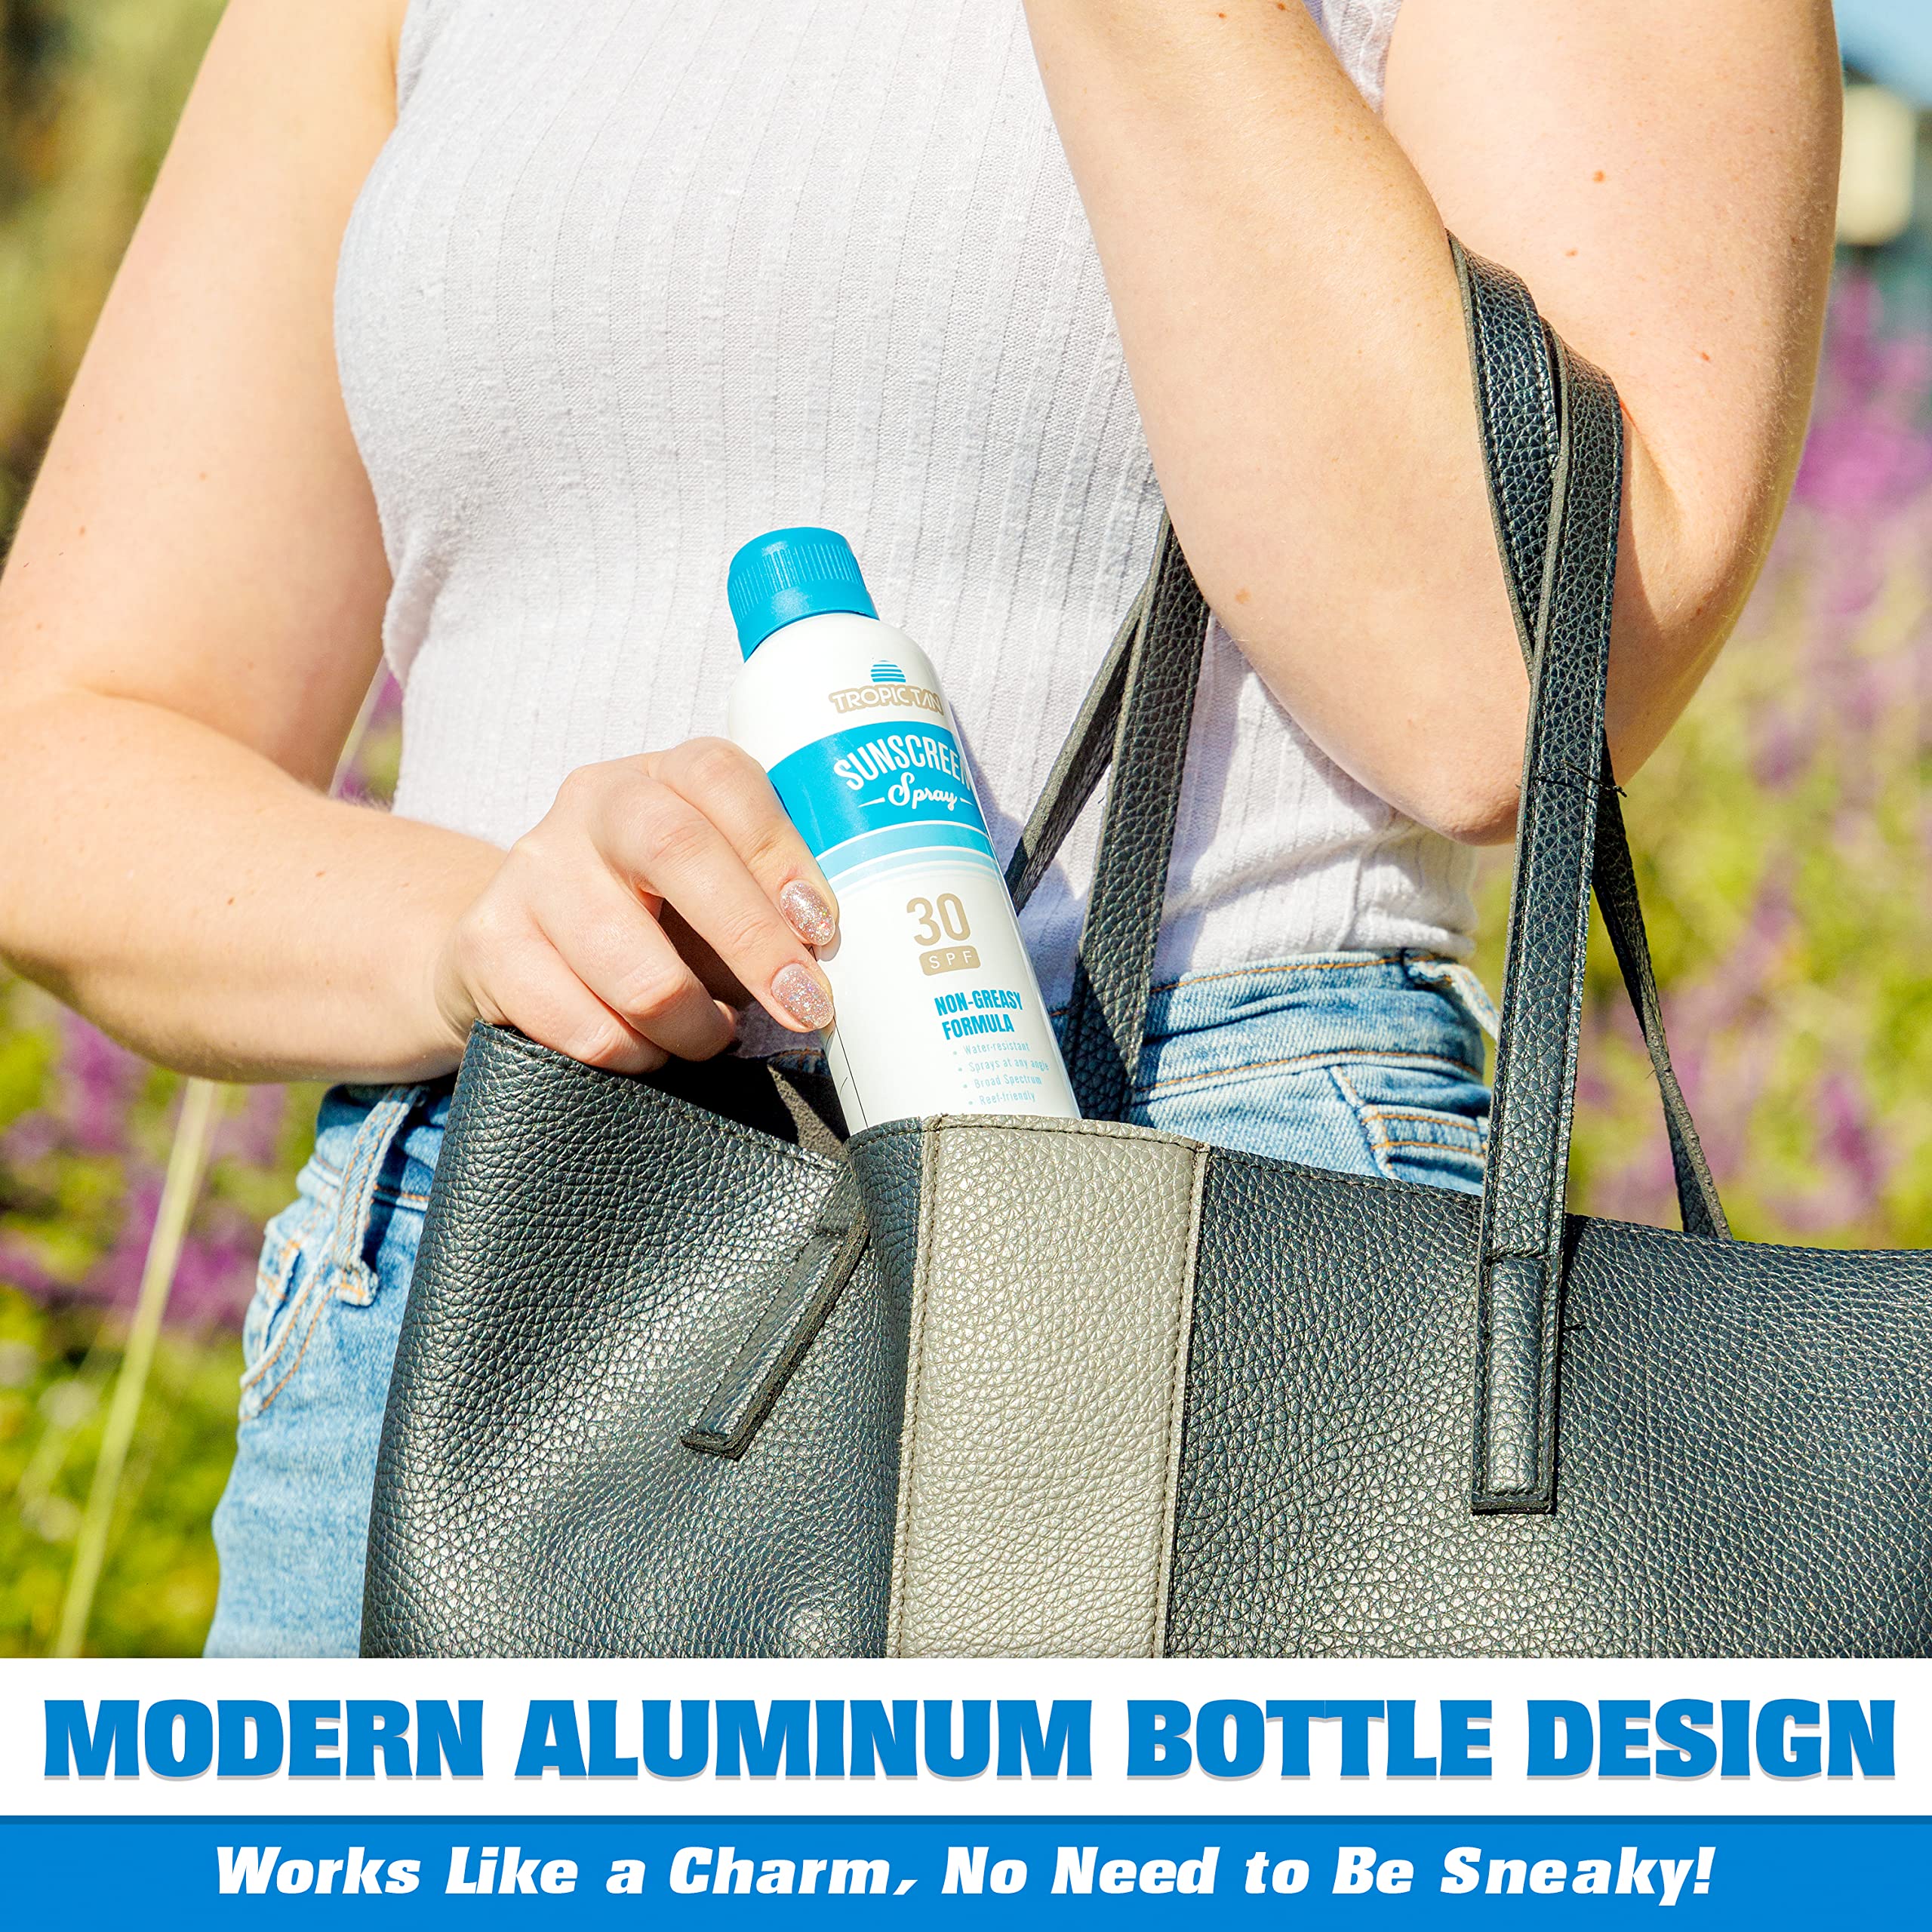 GoPong Sunscreen Flask 2 Pack - Aluminum Spray Bottle Hidden Flask for Liquor - Includes Funnel and Liquor Bottle Pour Spout